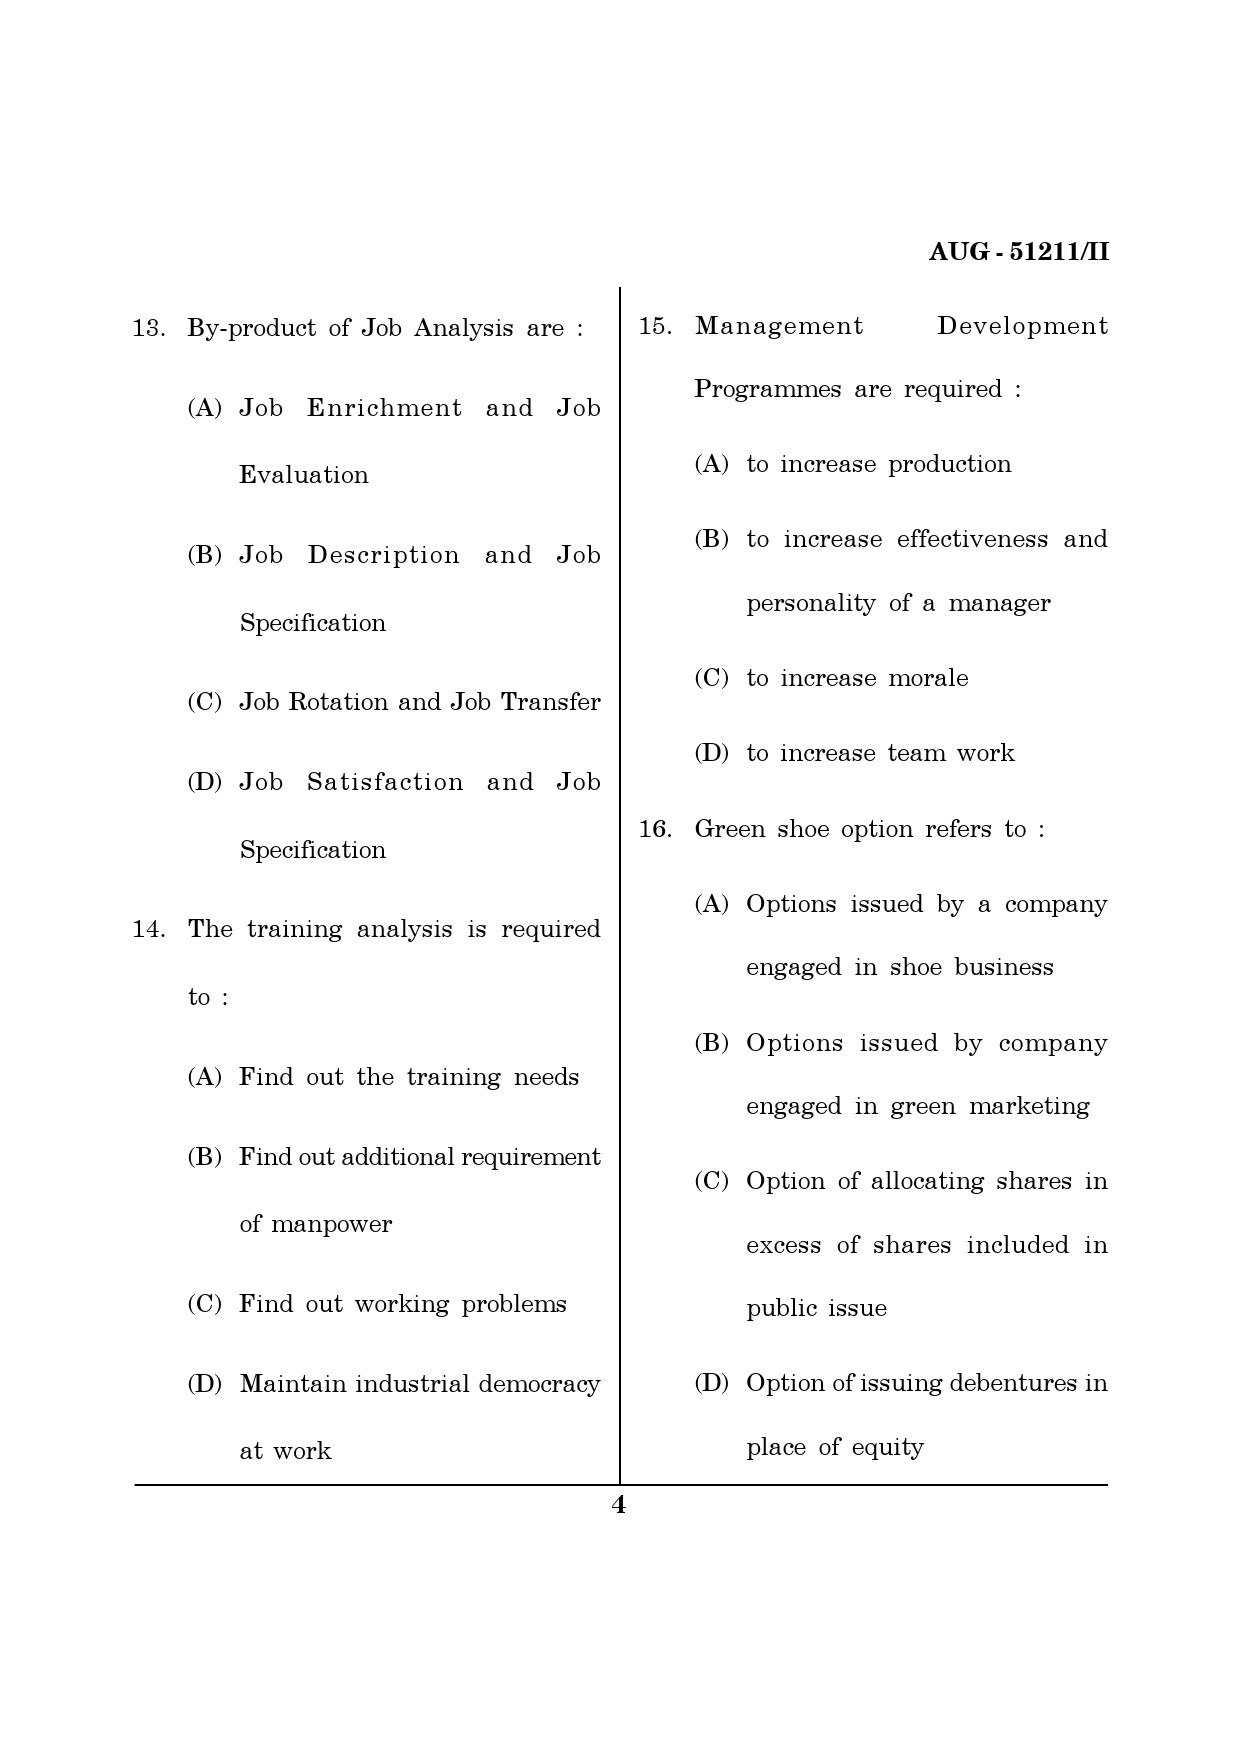 Maharashtra SET Management Question Paper II August 2011 4